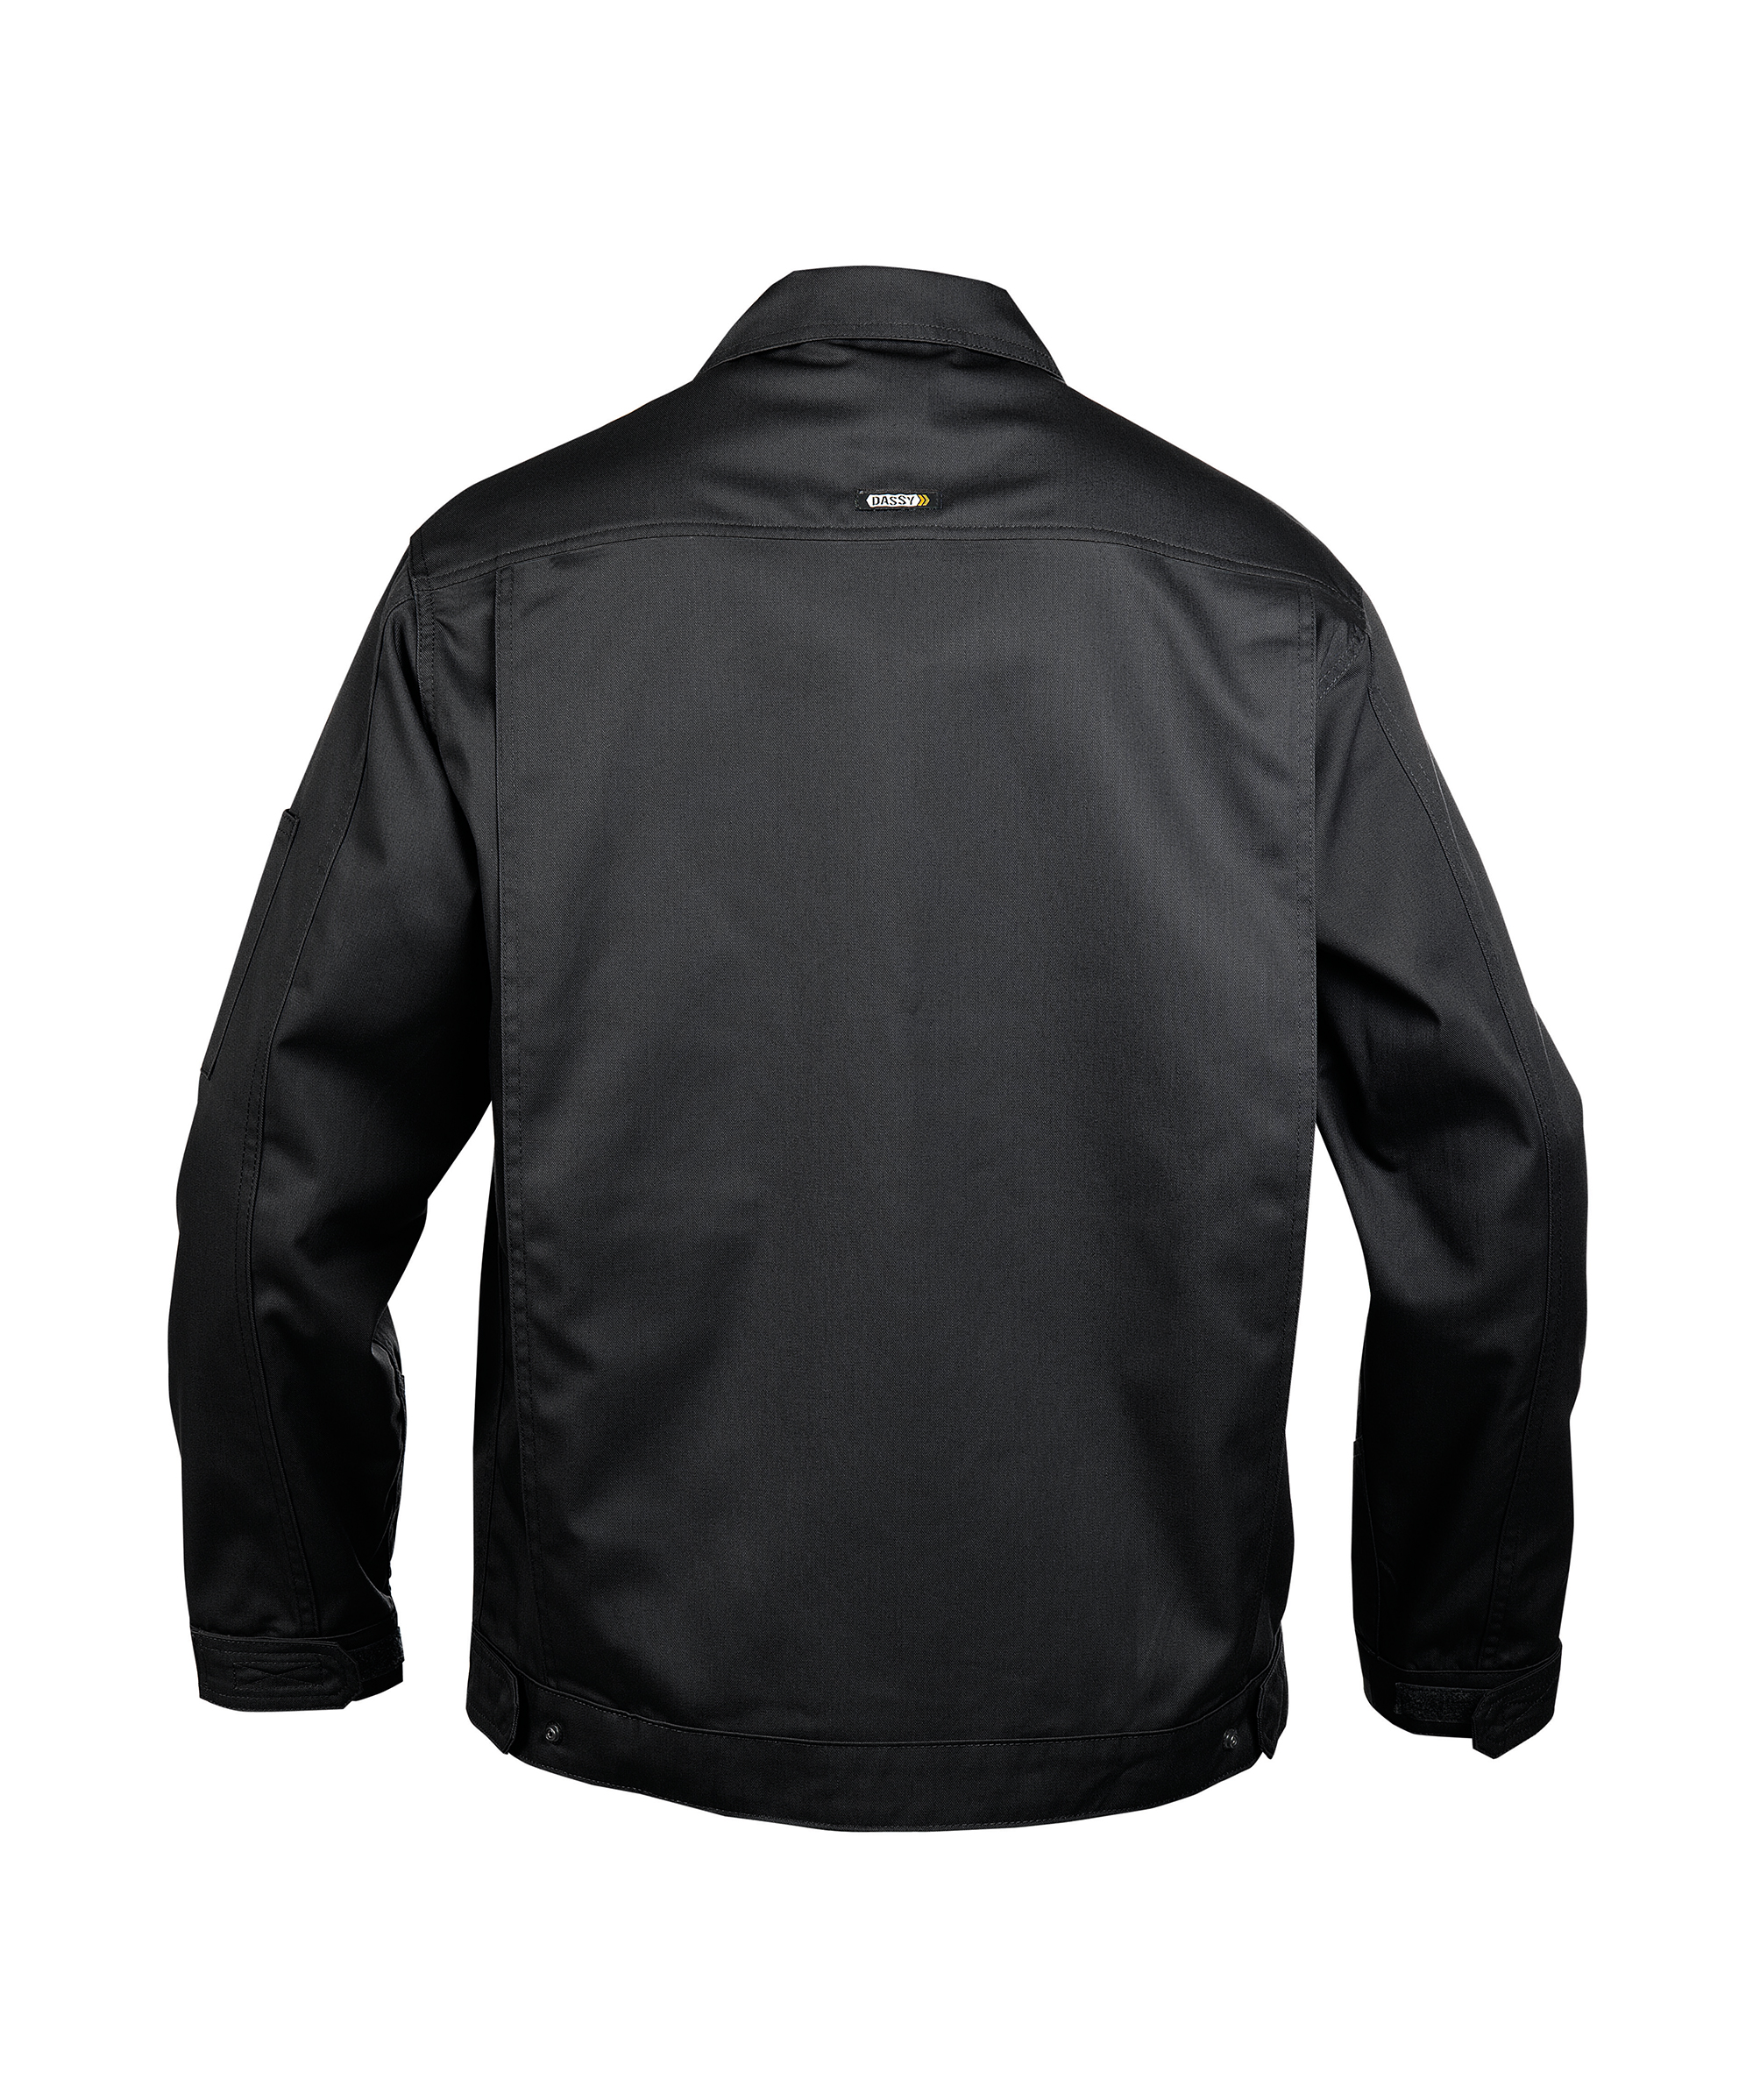 locarno_work-jacket_black_back.jpg